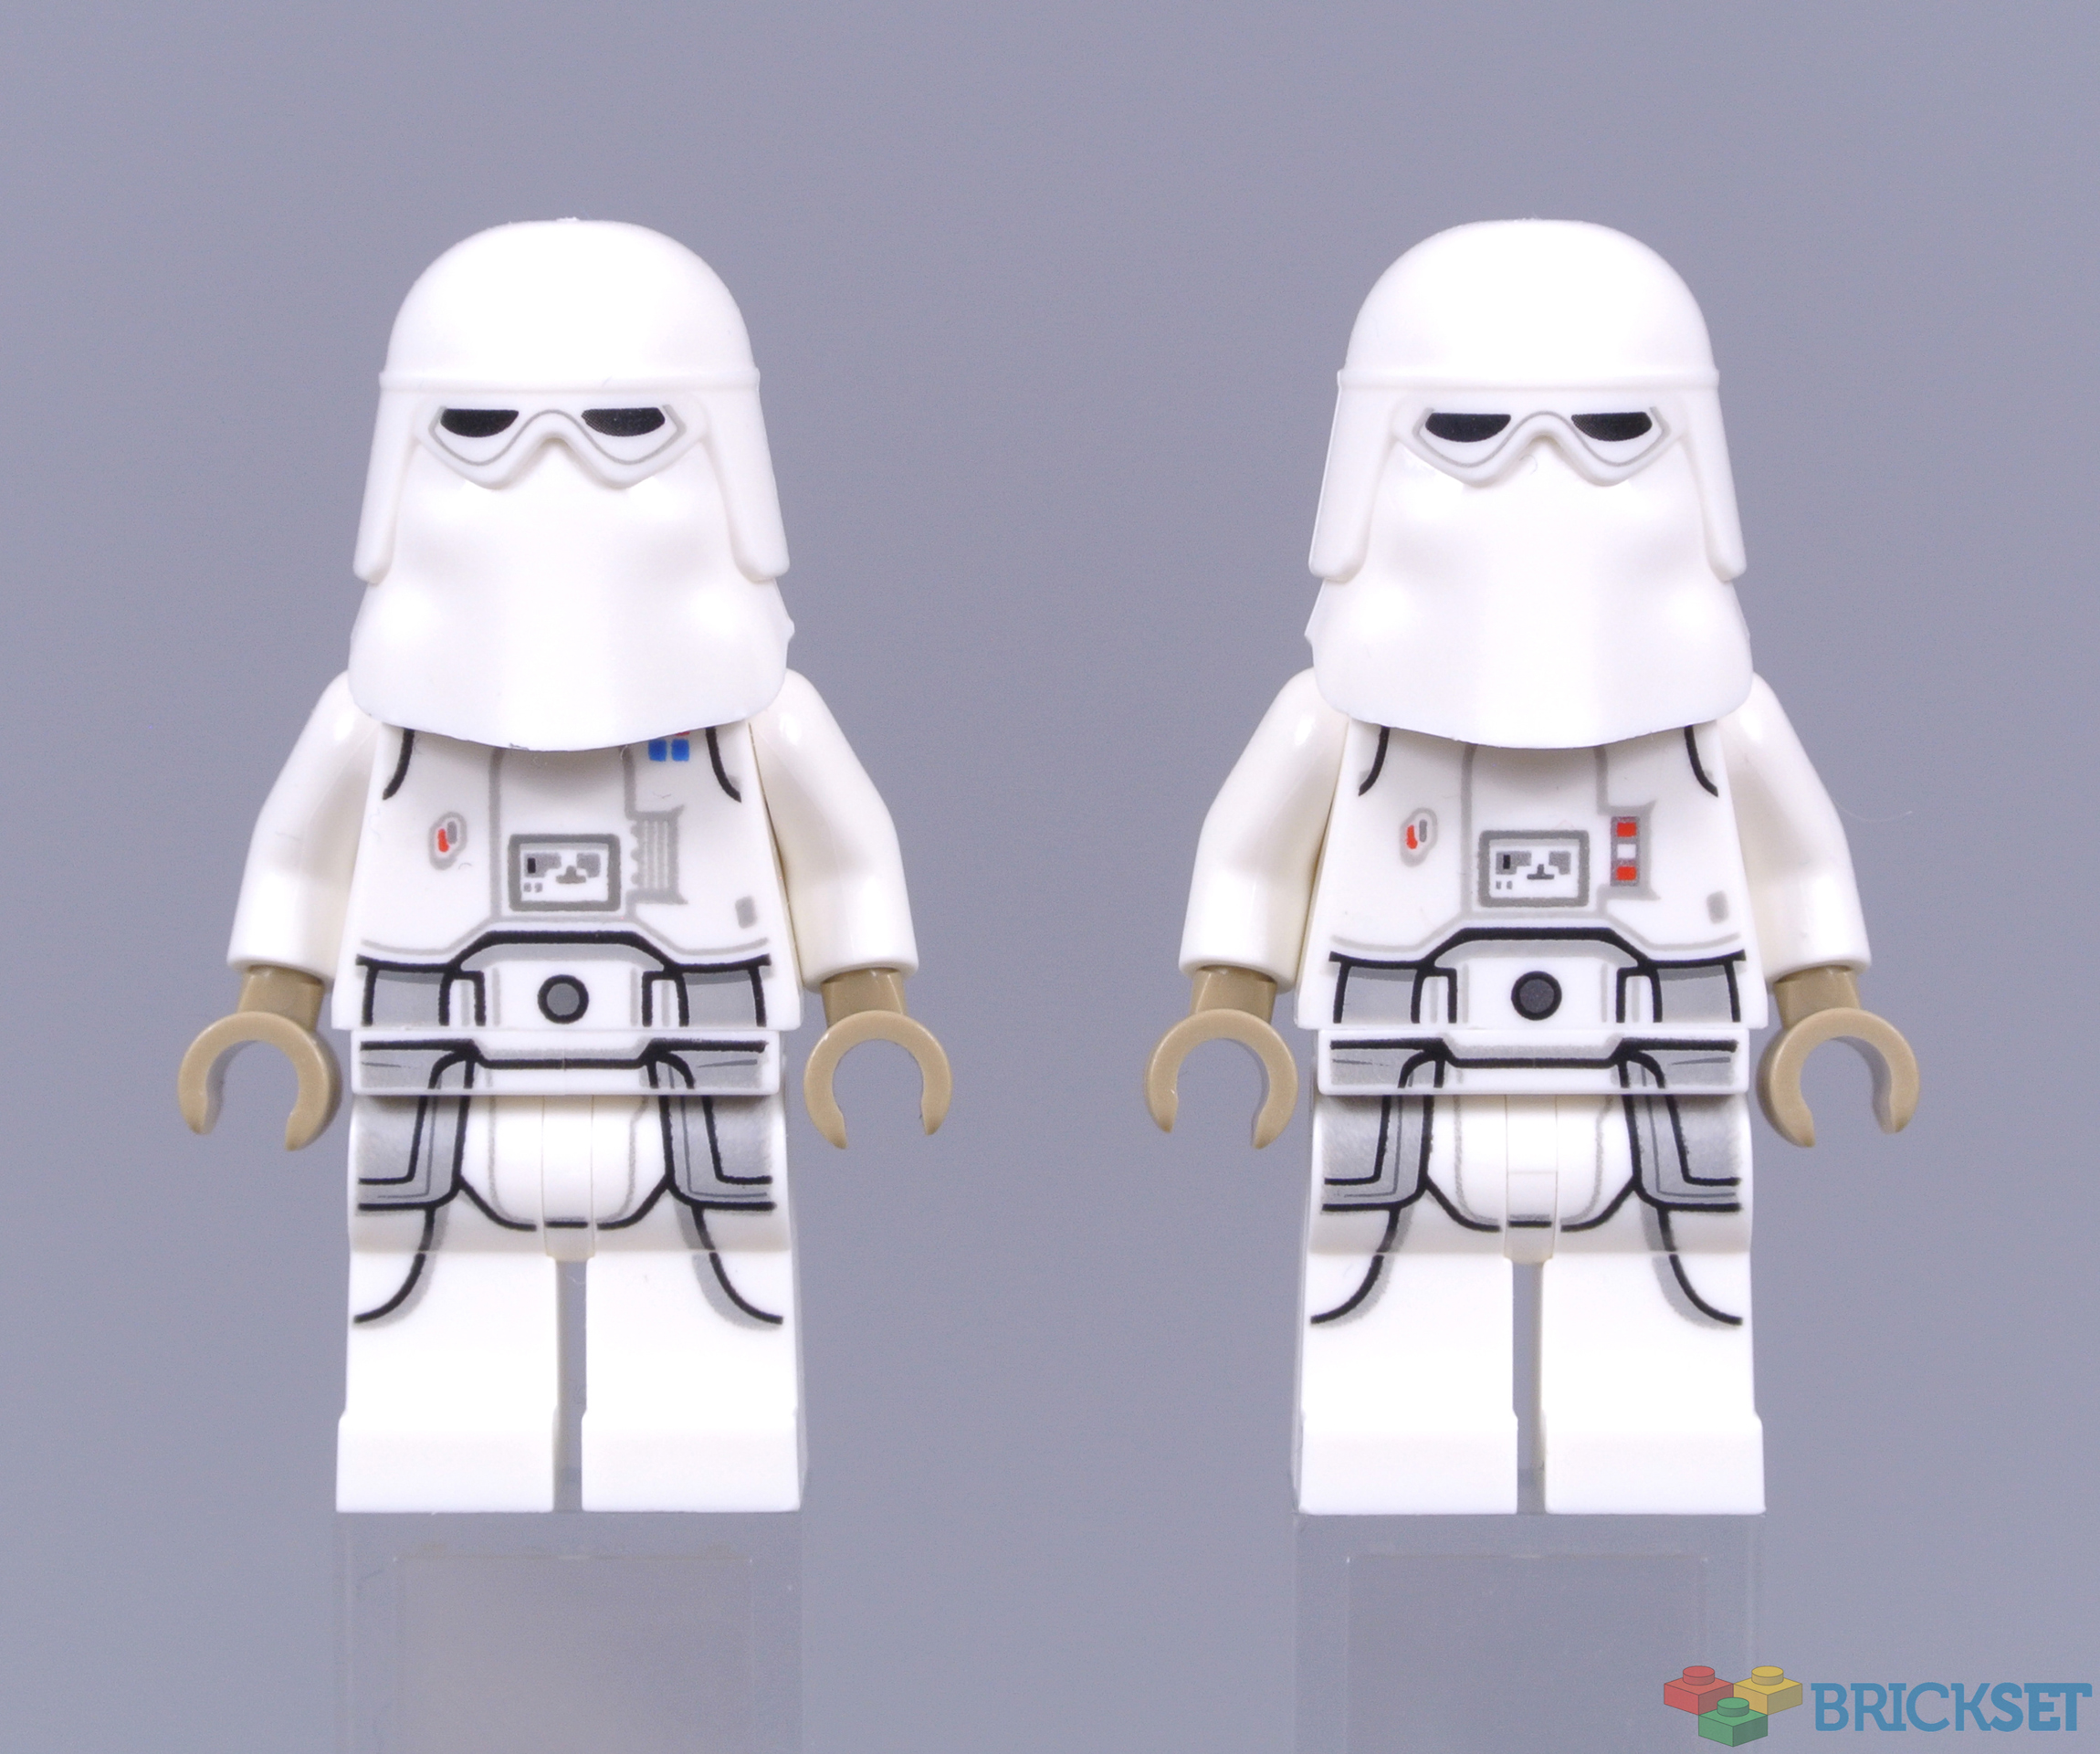 Acrylic Display Frame Insert For Lego Star Wars Ep 1 phantom menace Minifigures 